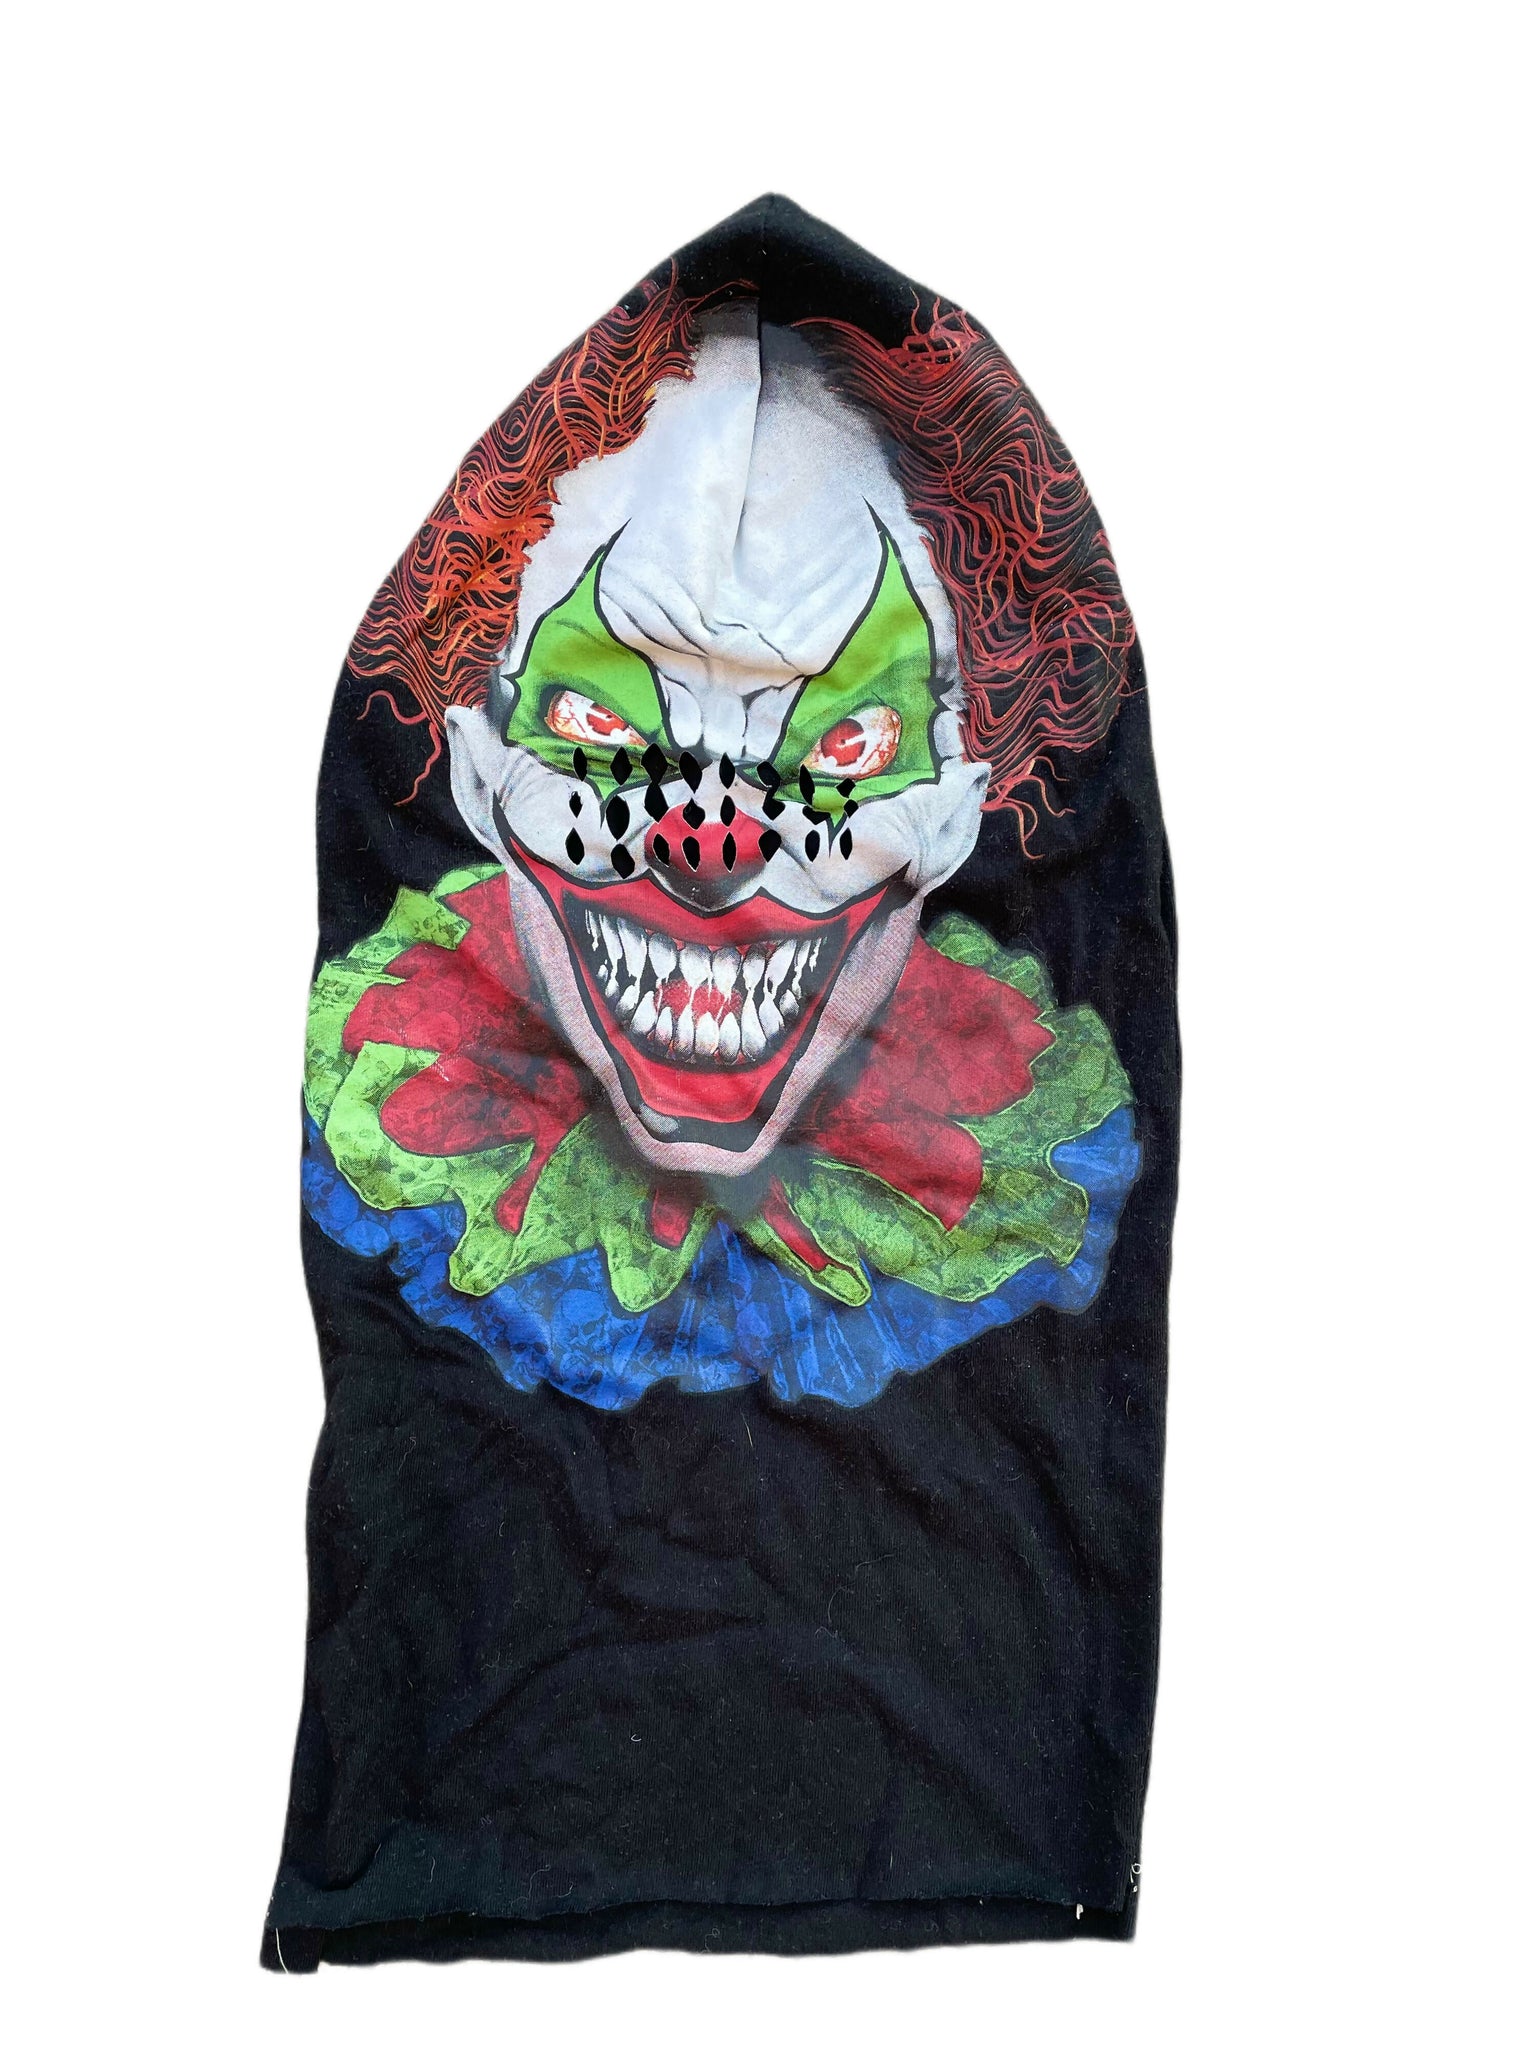 Clown mask (Kanye tshirt inspired)